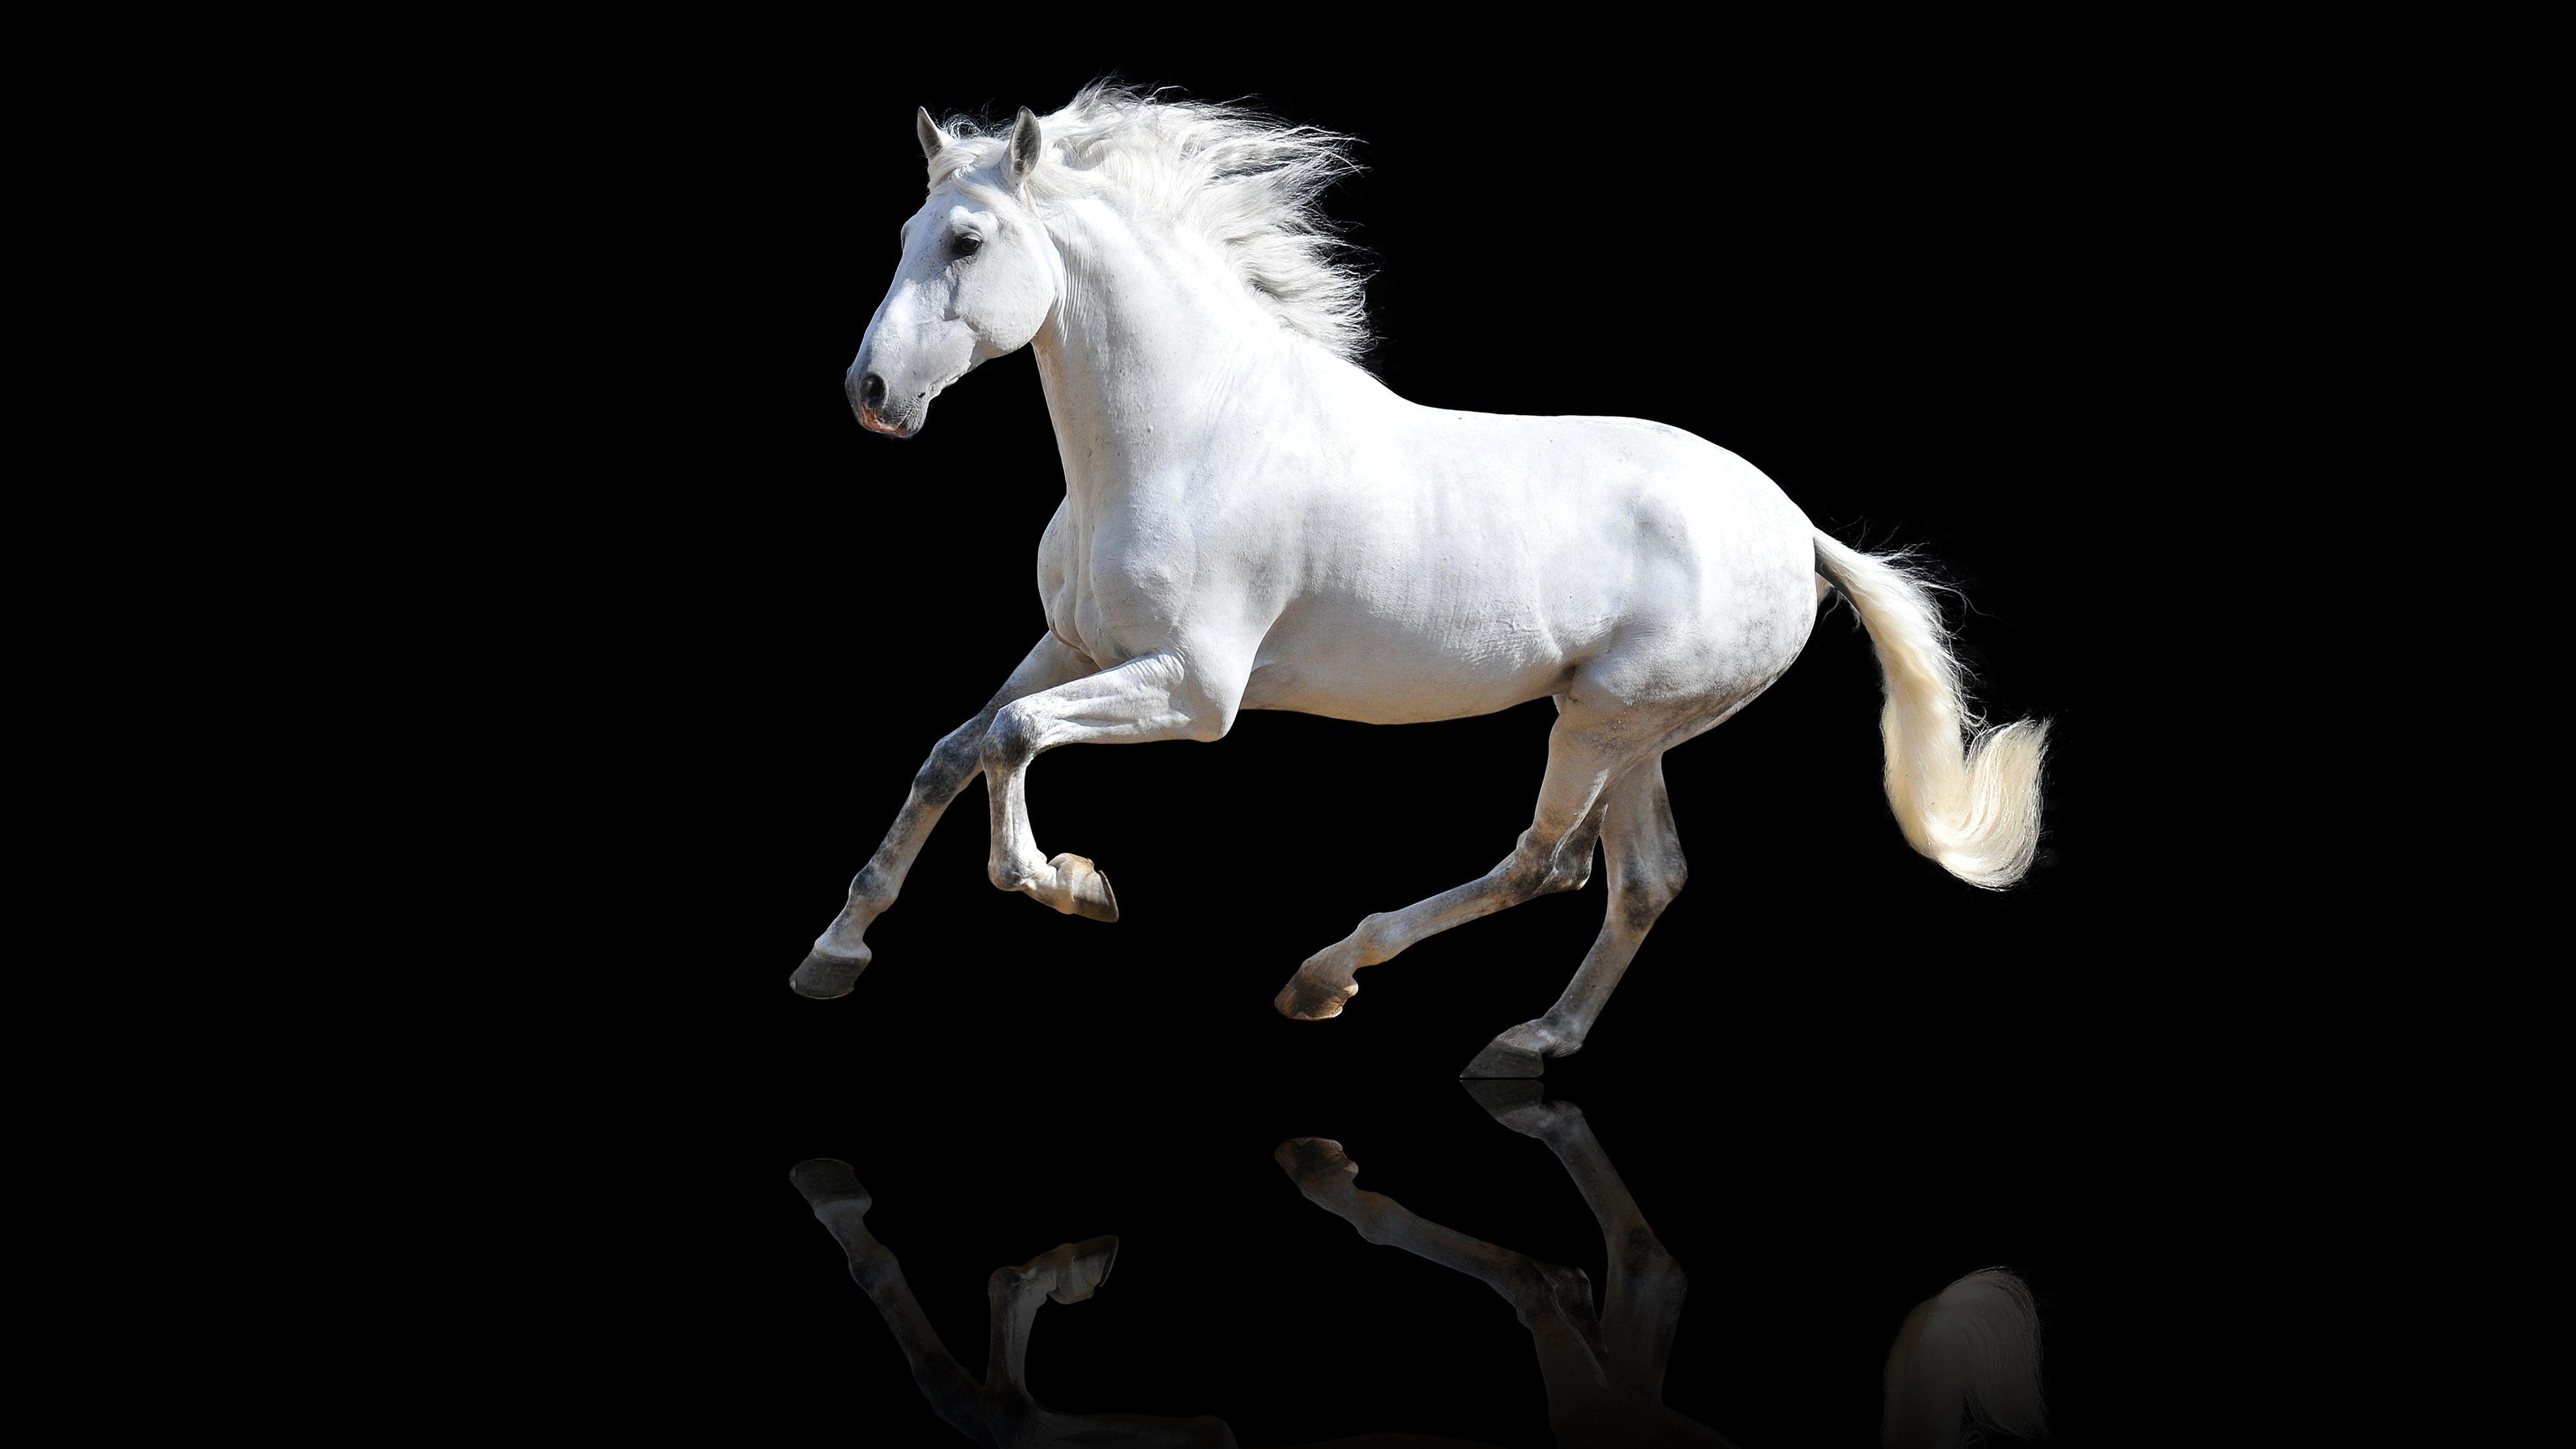 Wallpapers animals horses white on the desktop